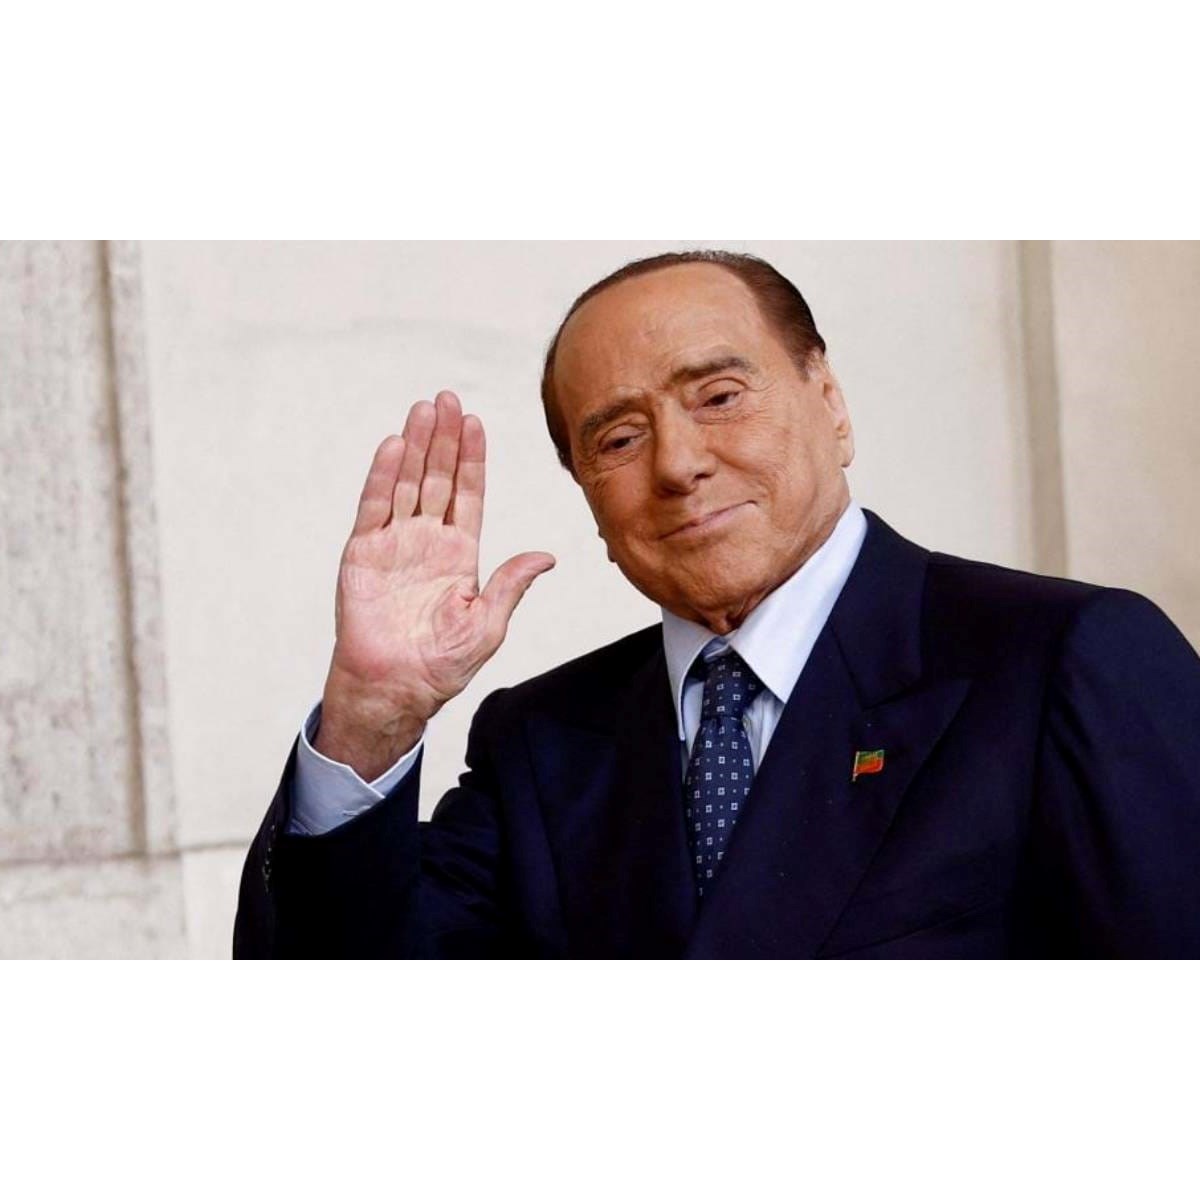 Silvio Berlusconi diagnosticado com leucemia